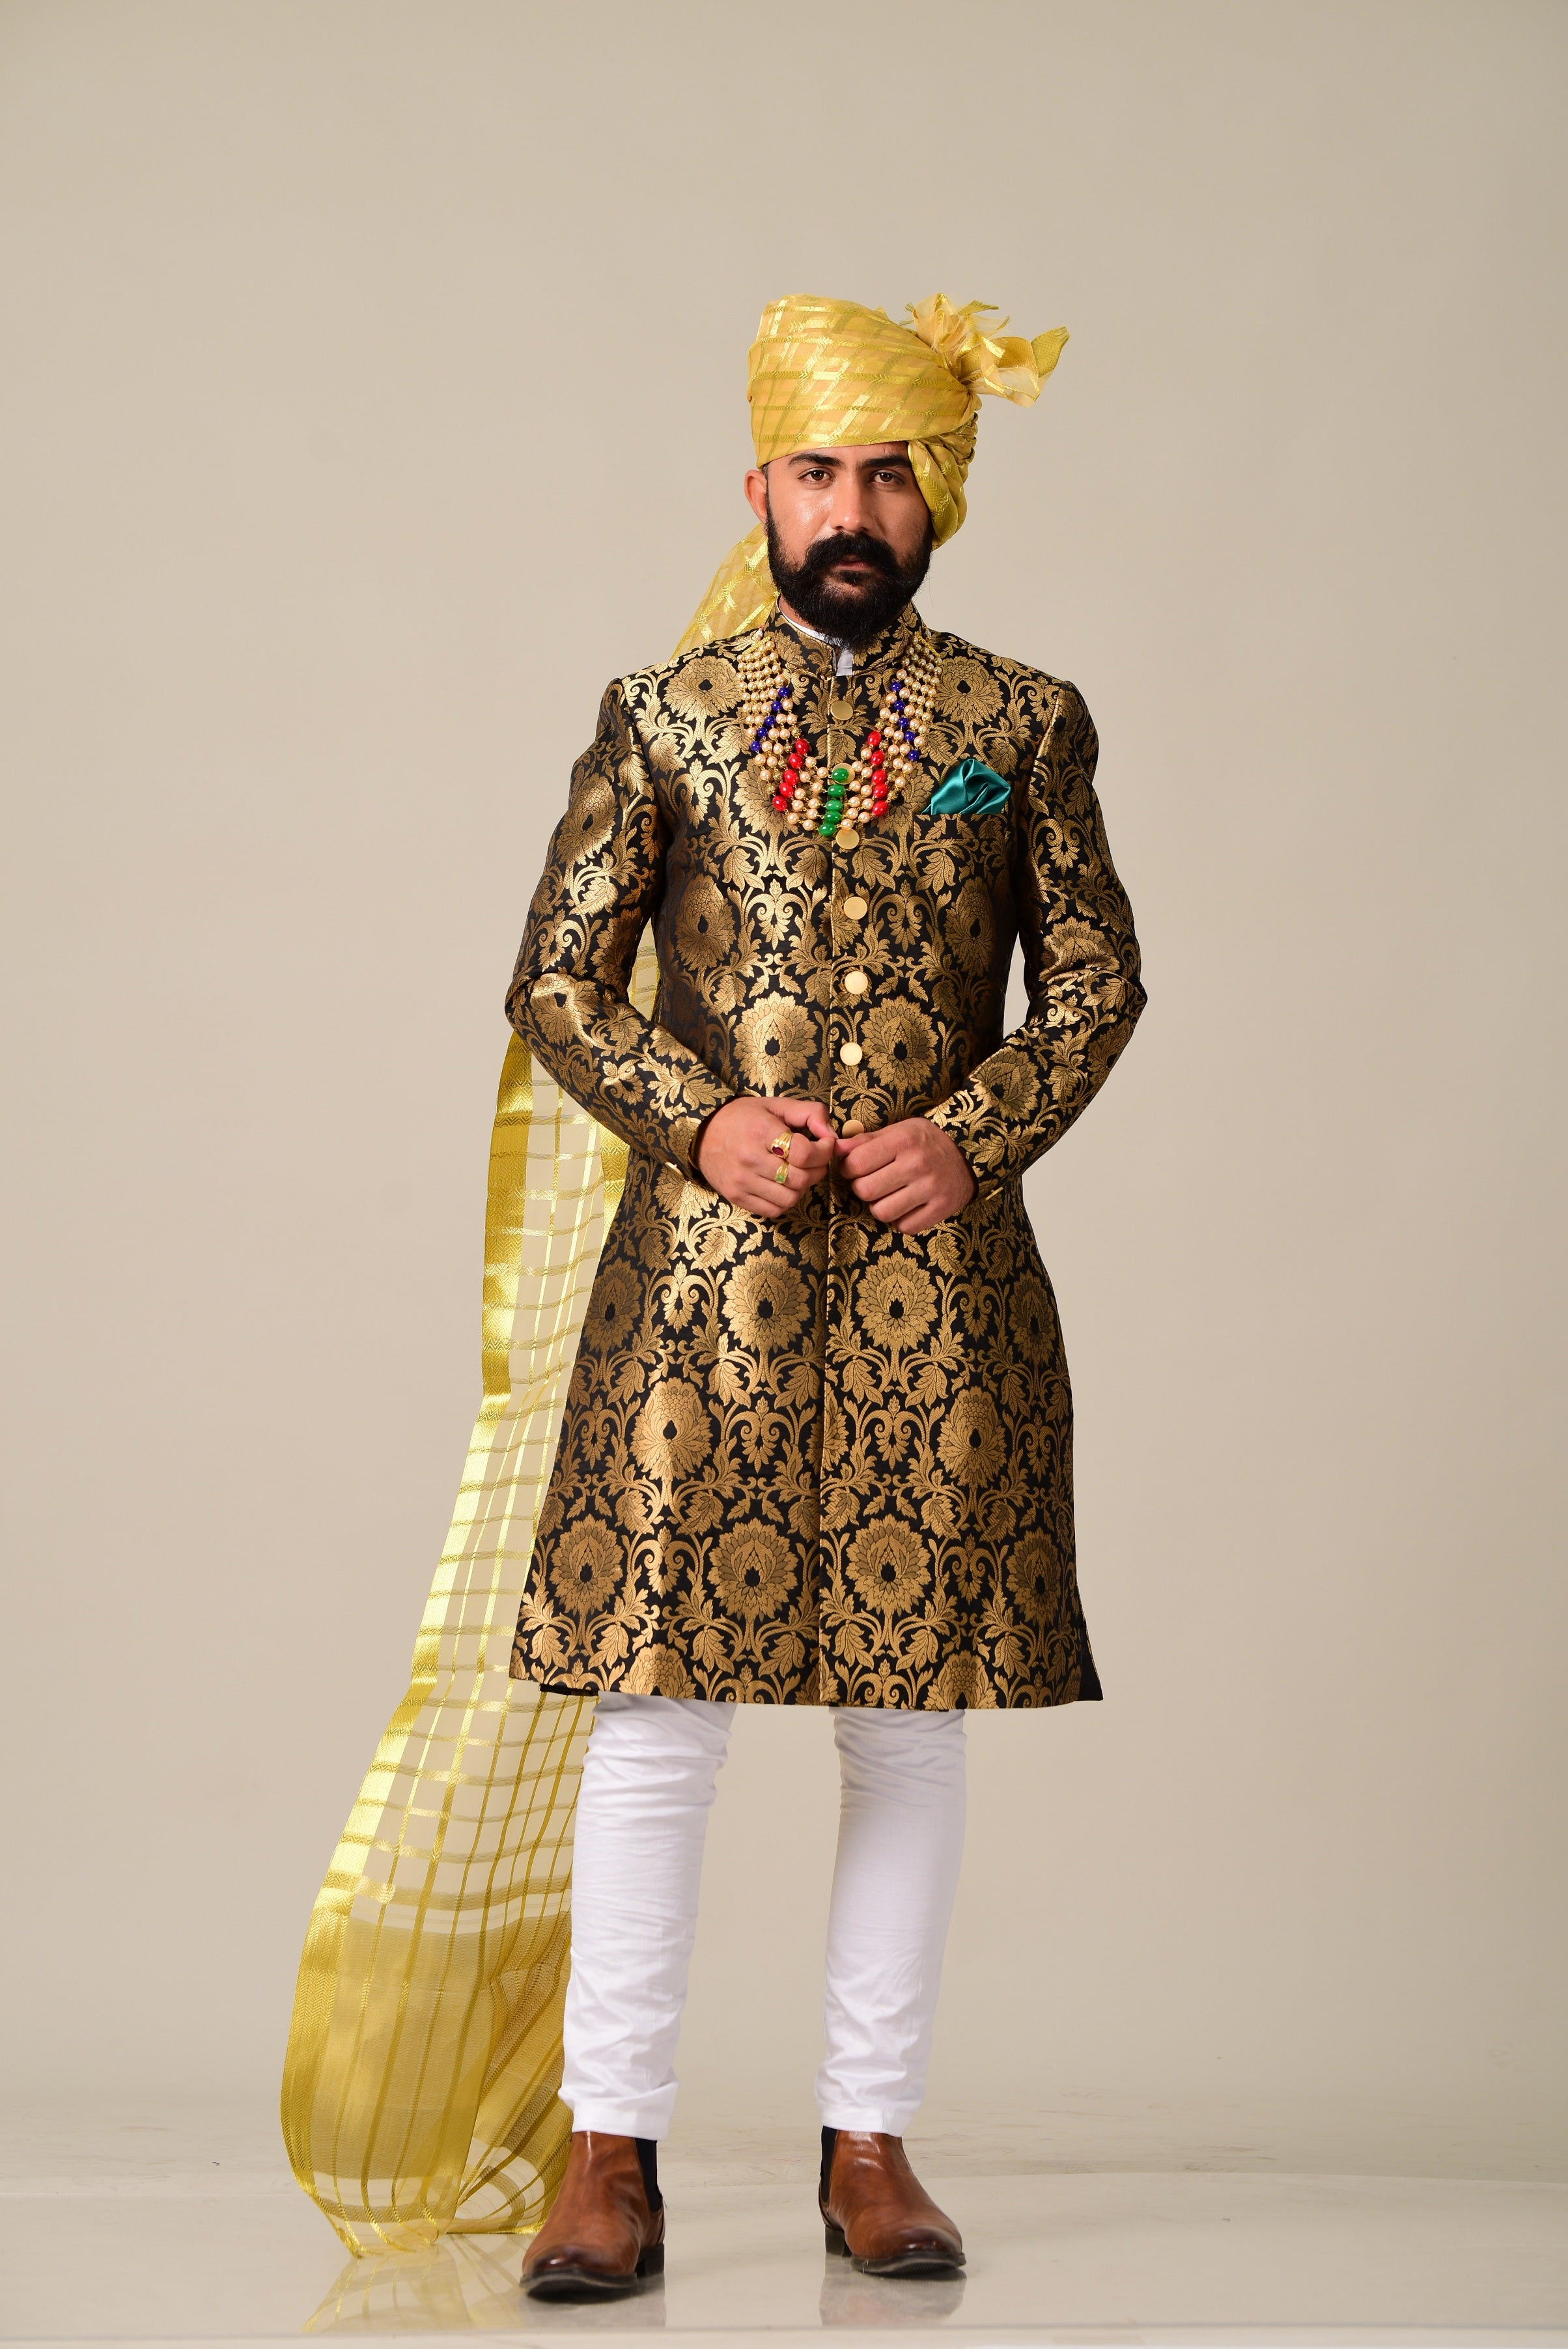 Elegant Hand-crafted Rajputana Styled Silky Smooth Velvet Sherwani /Achkan for Men | Indian Formal Kurta Style wear Perfect for Family Weddings & Grooms | Gold Black